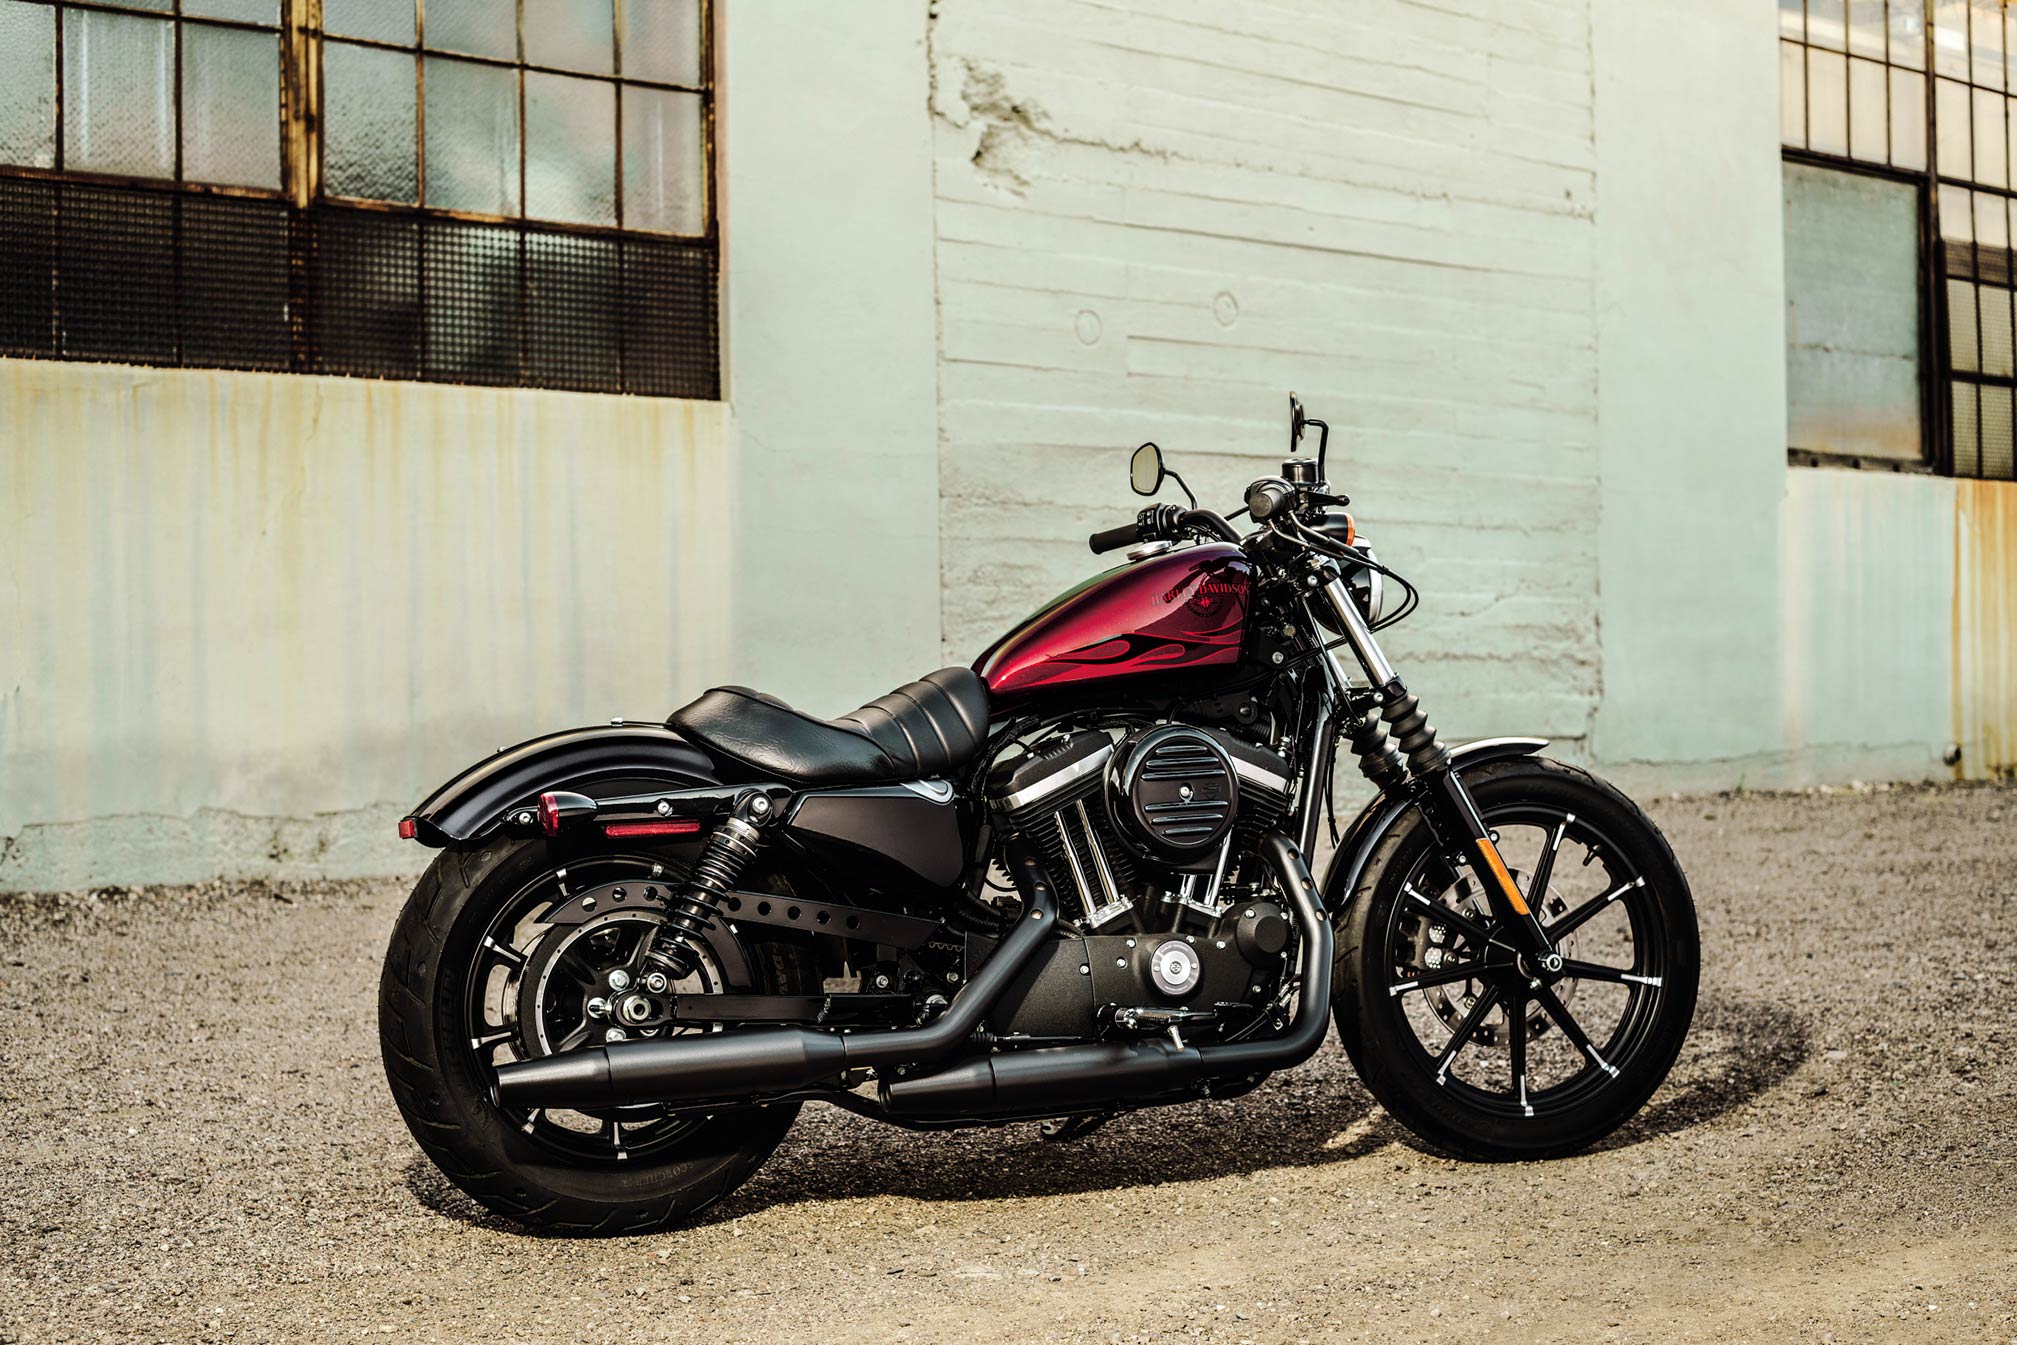 Télécharger des fonds d'écran Harley Davidson Sportster HD